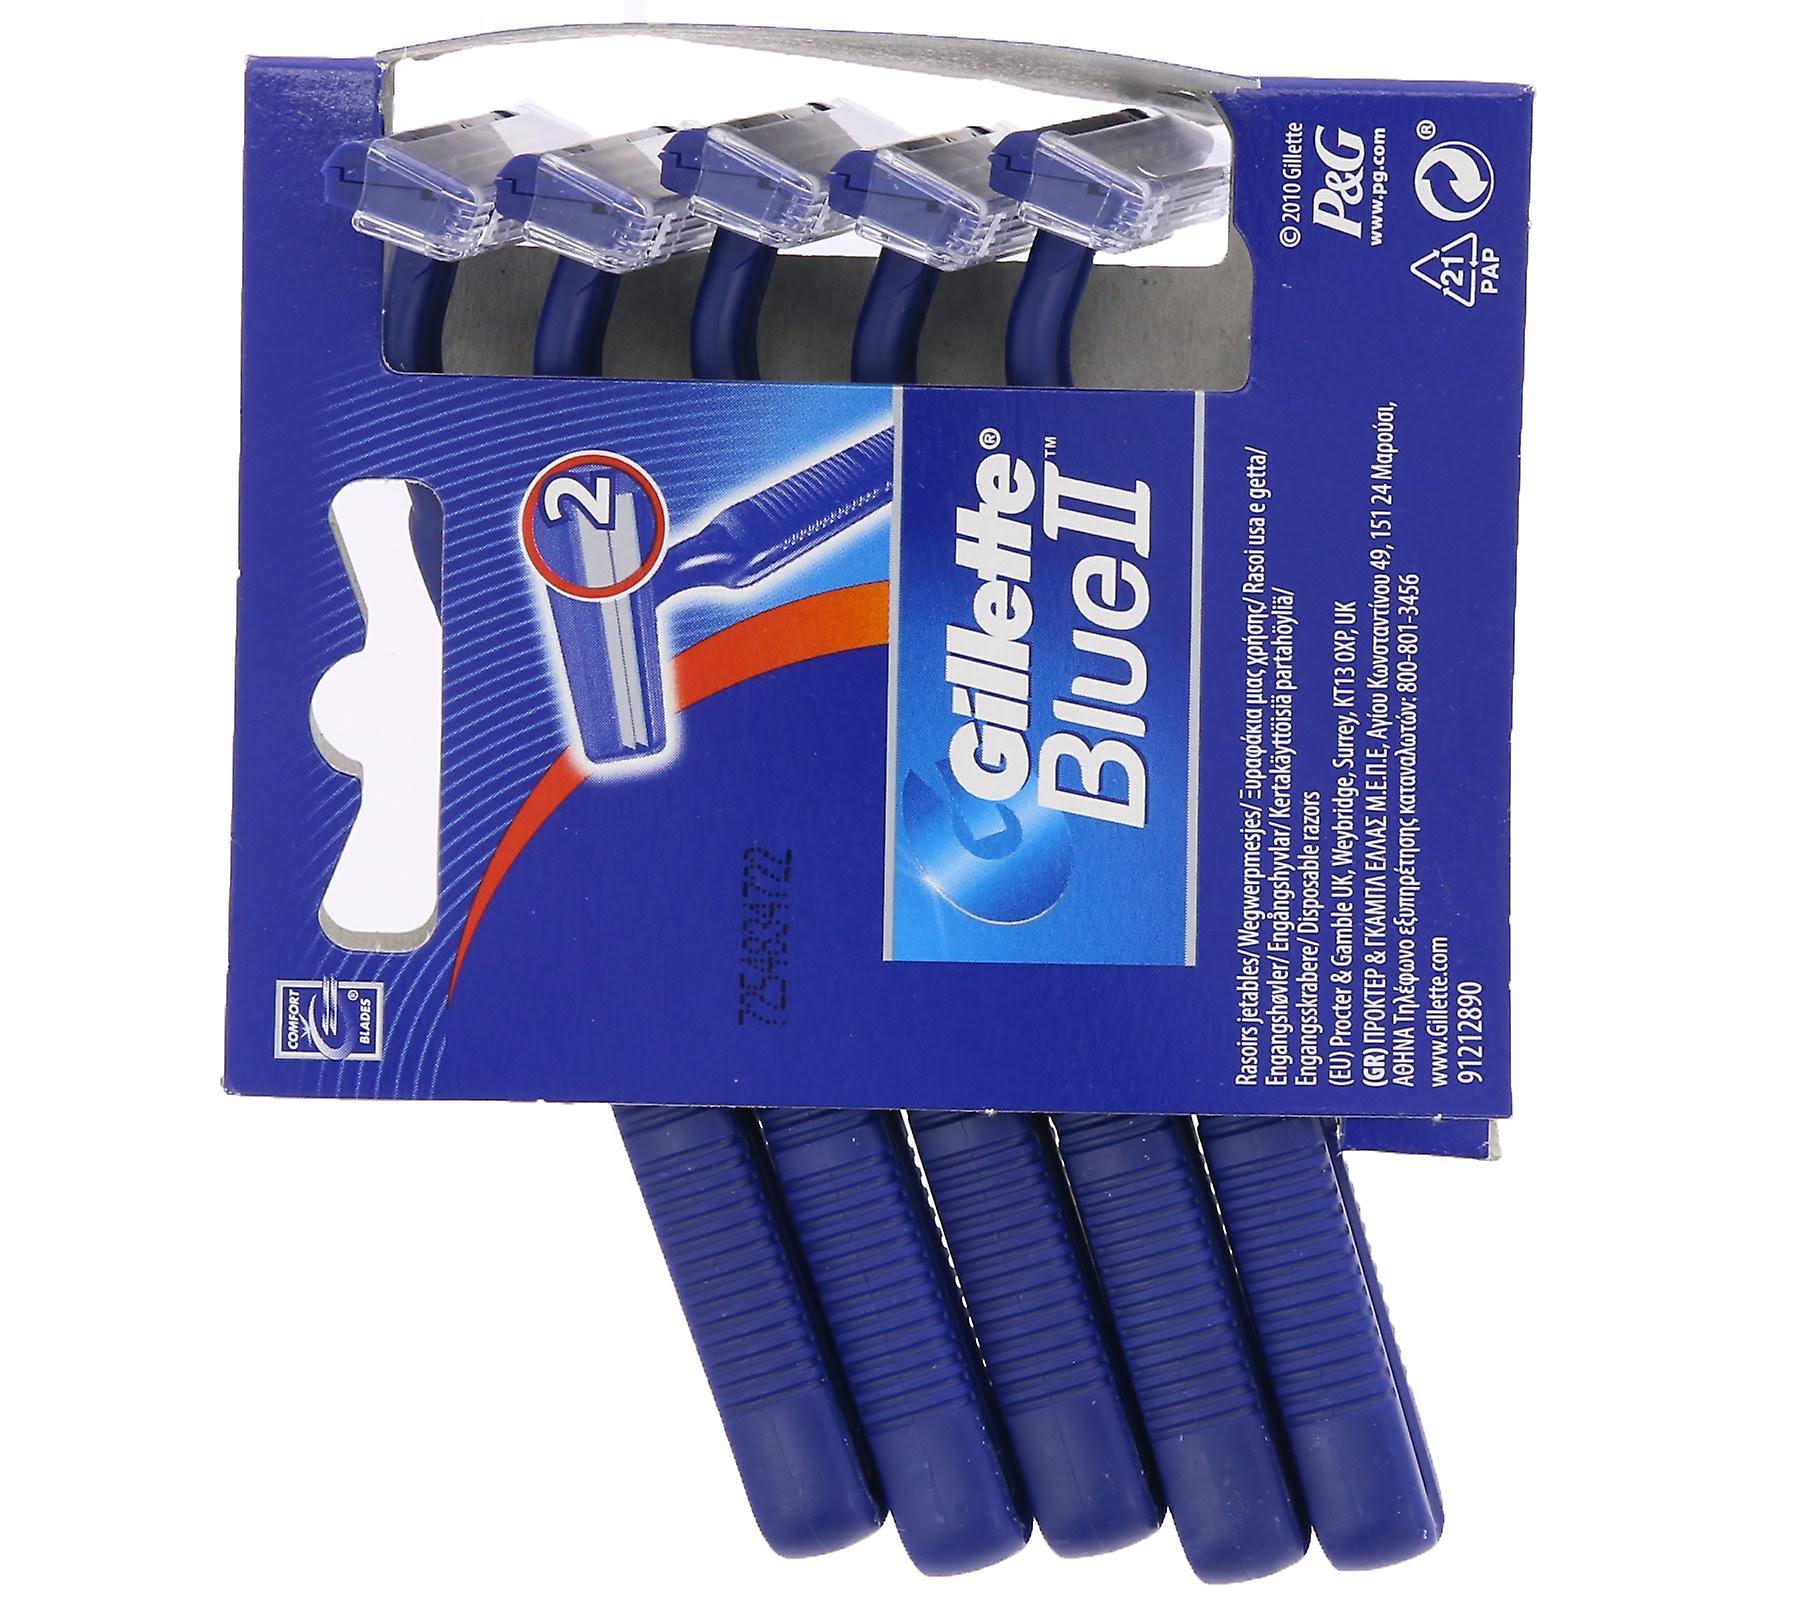 Gillette Blue II Men's Disposable Razors - 5 Pack